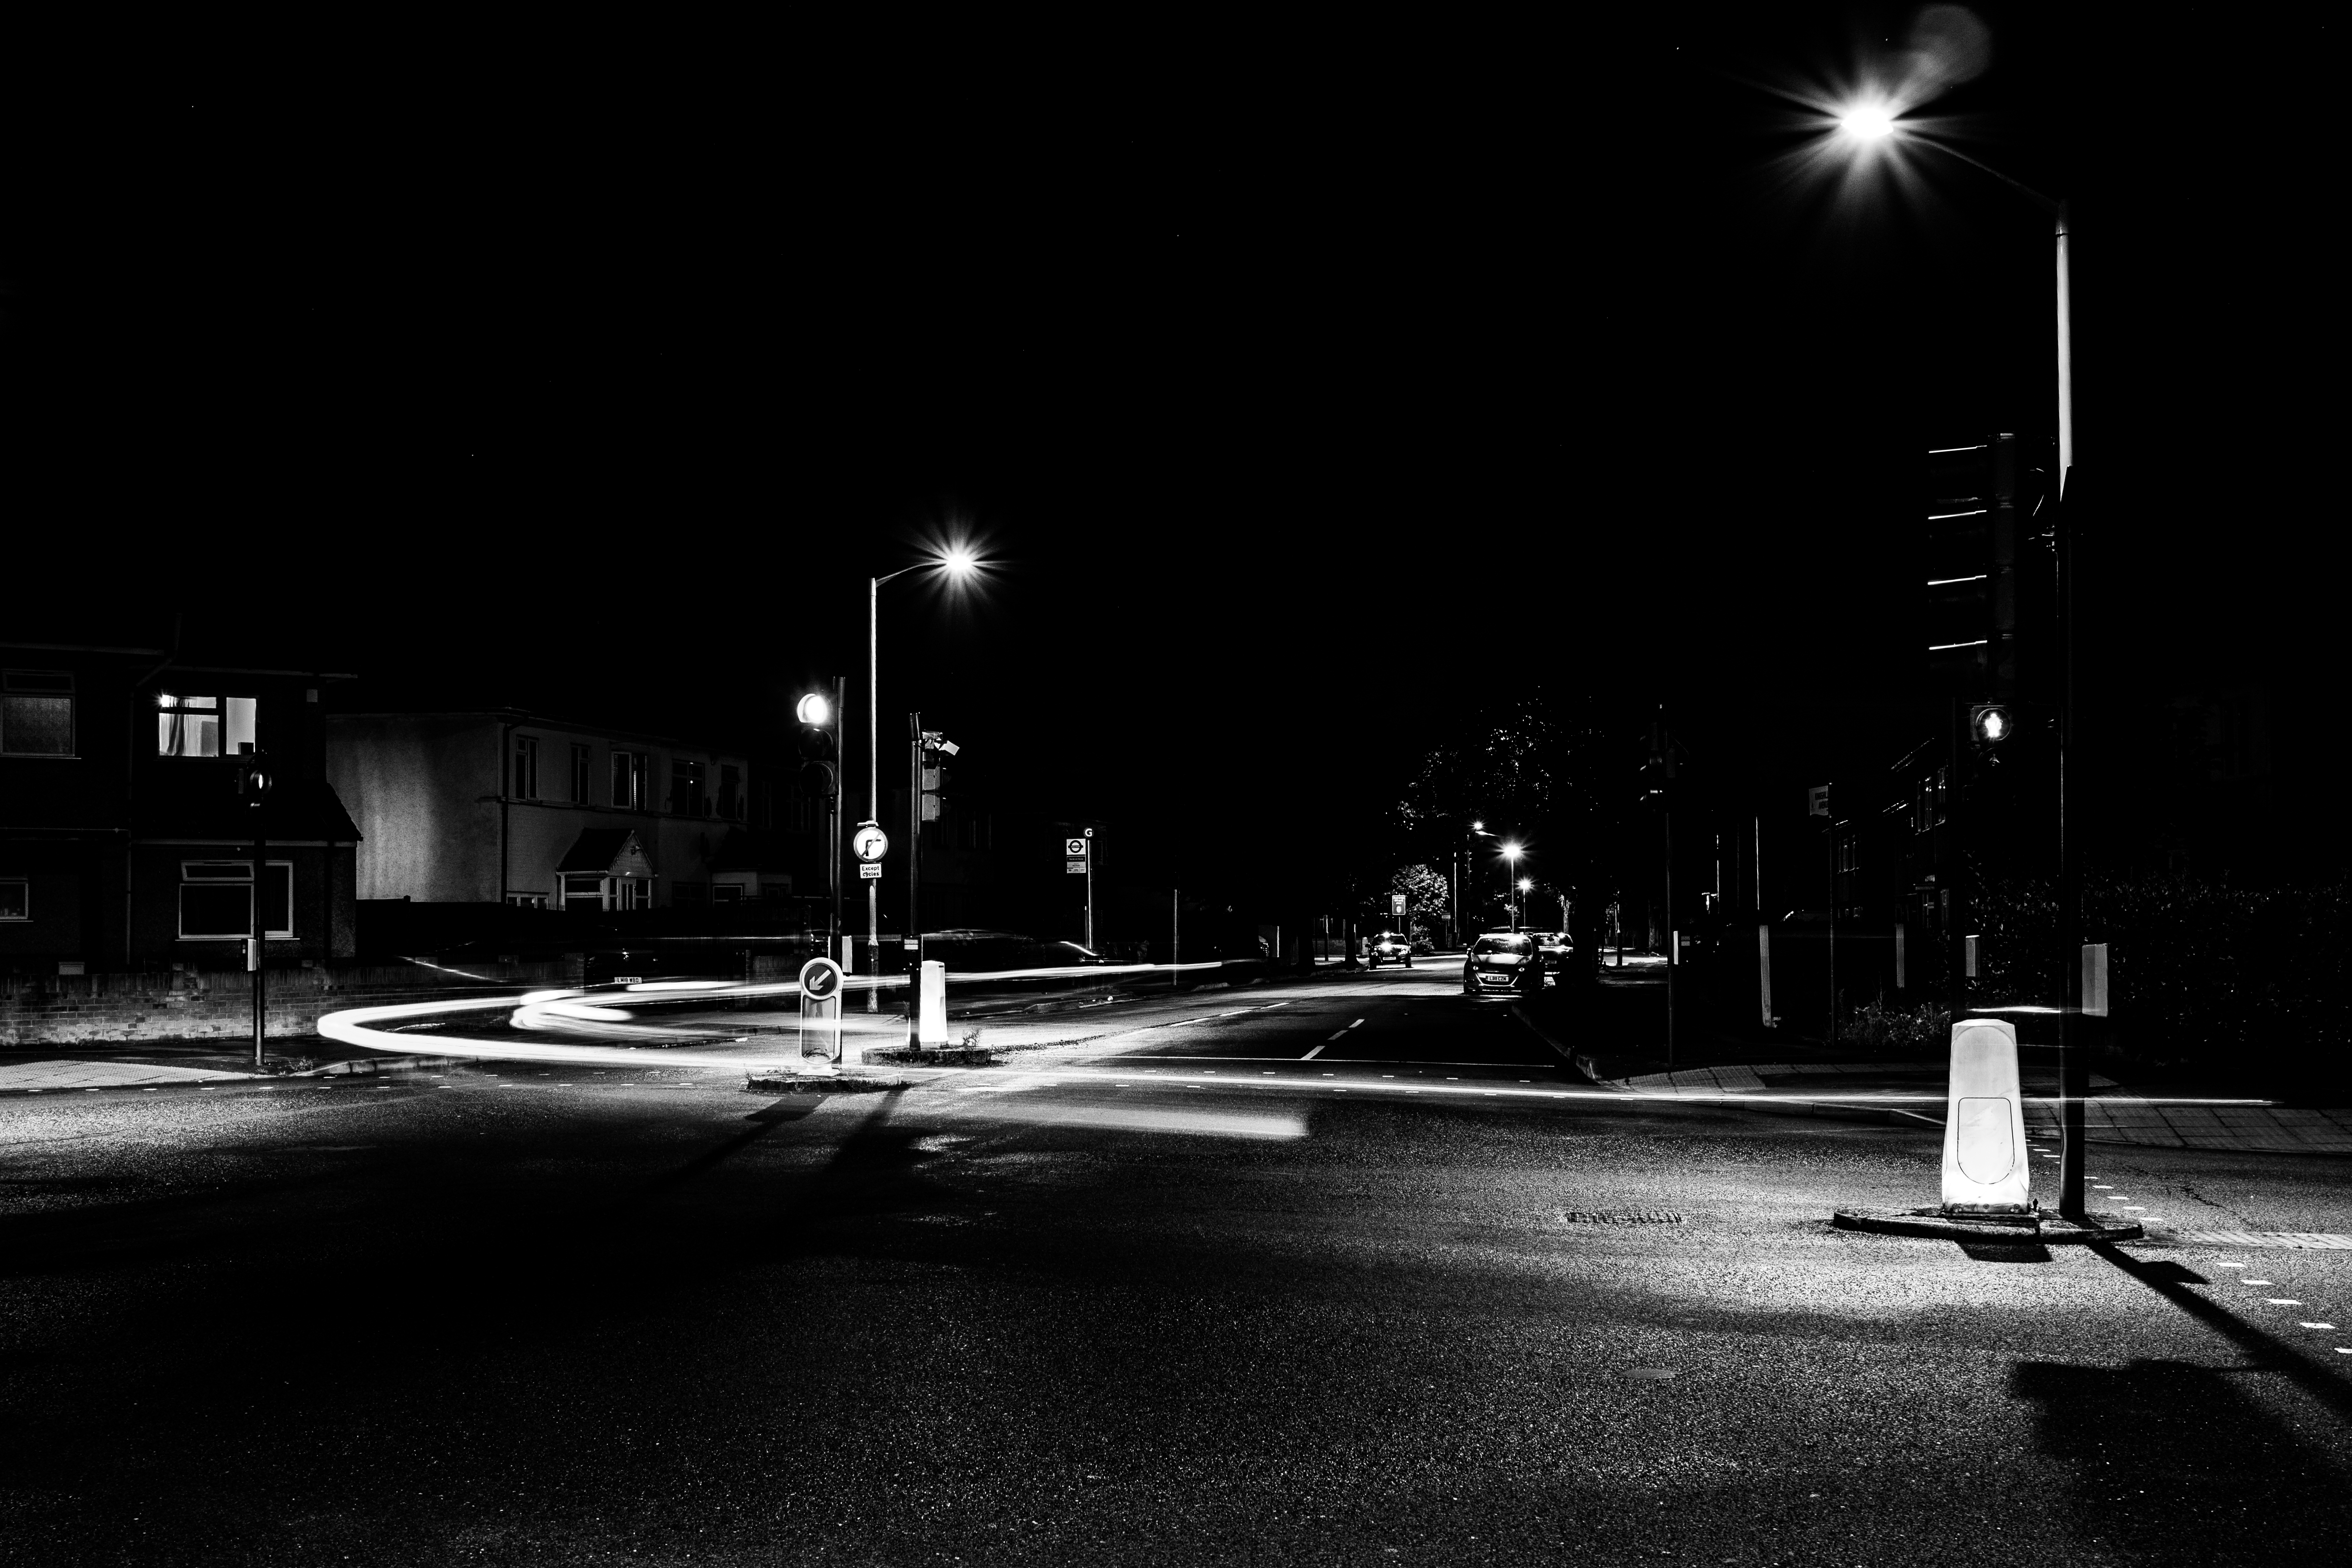 General 4859x3239 night Canon dark London street light monochrome street car vehicle sign